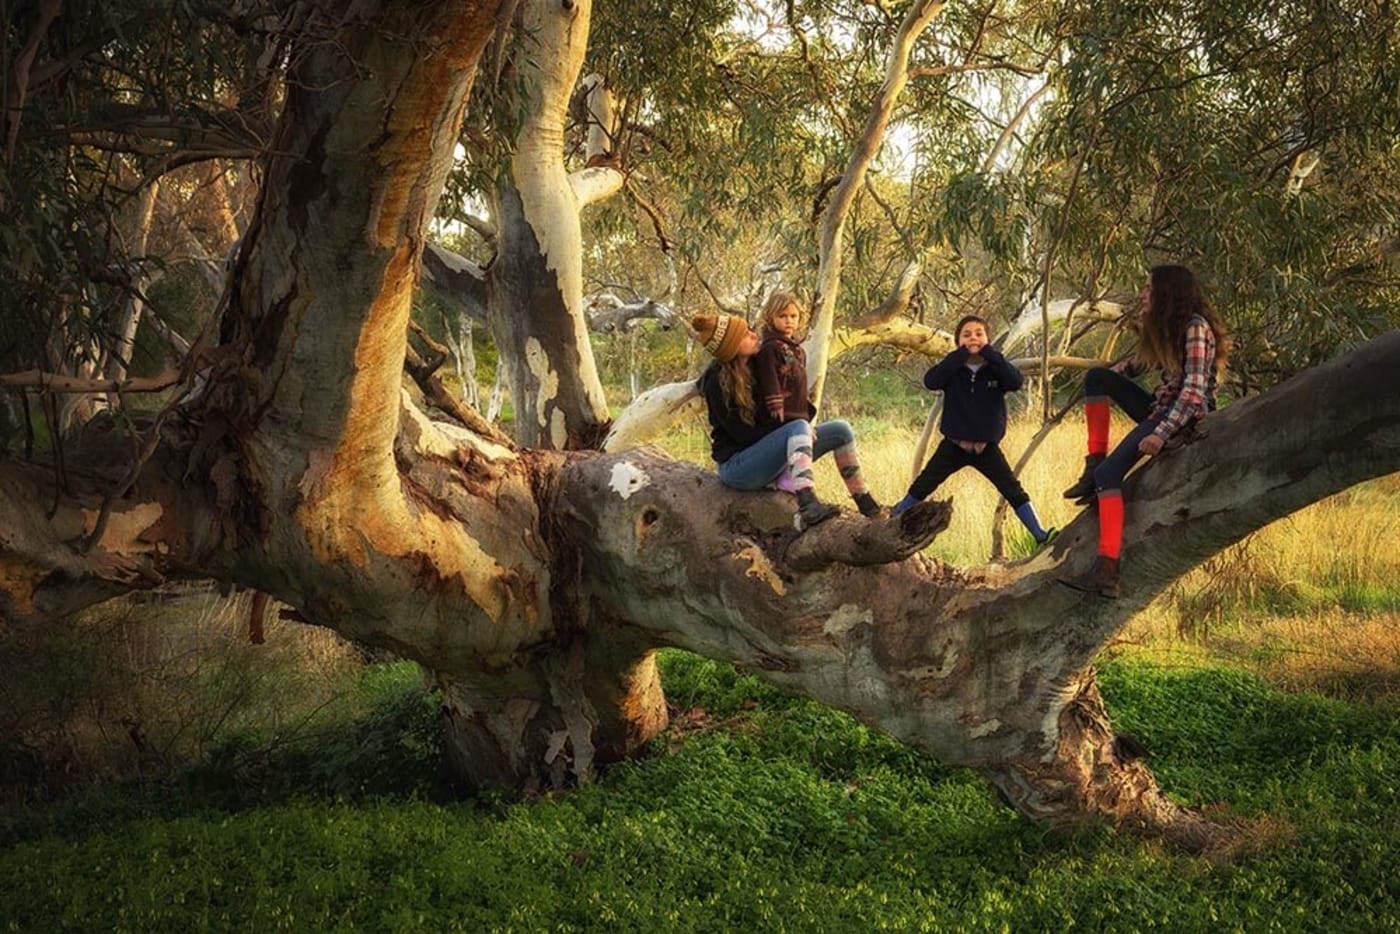 Kids playing in a tree, Harrogate, South Australia